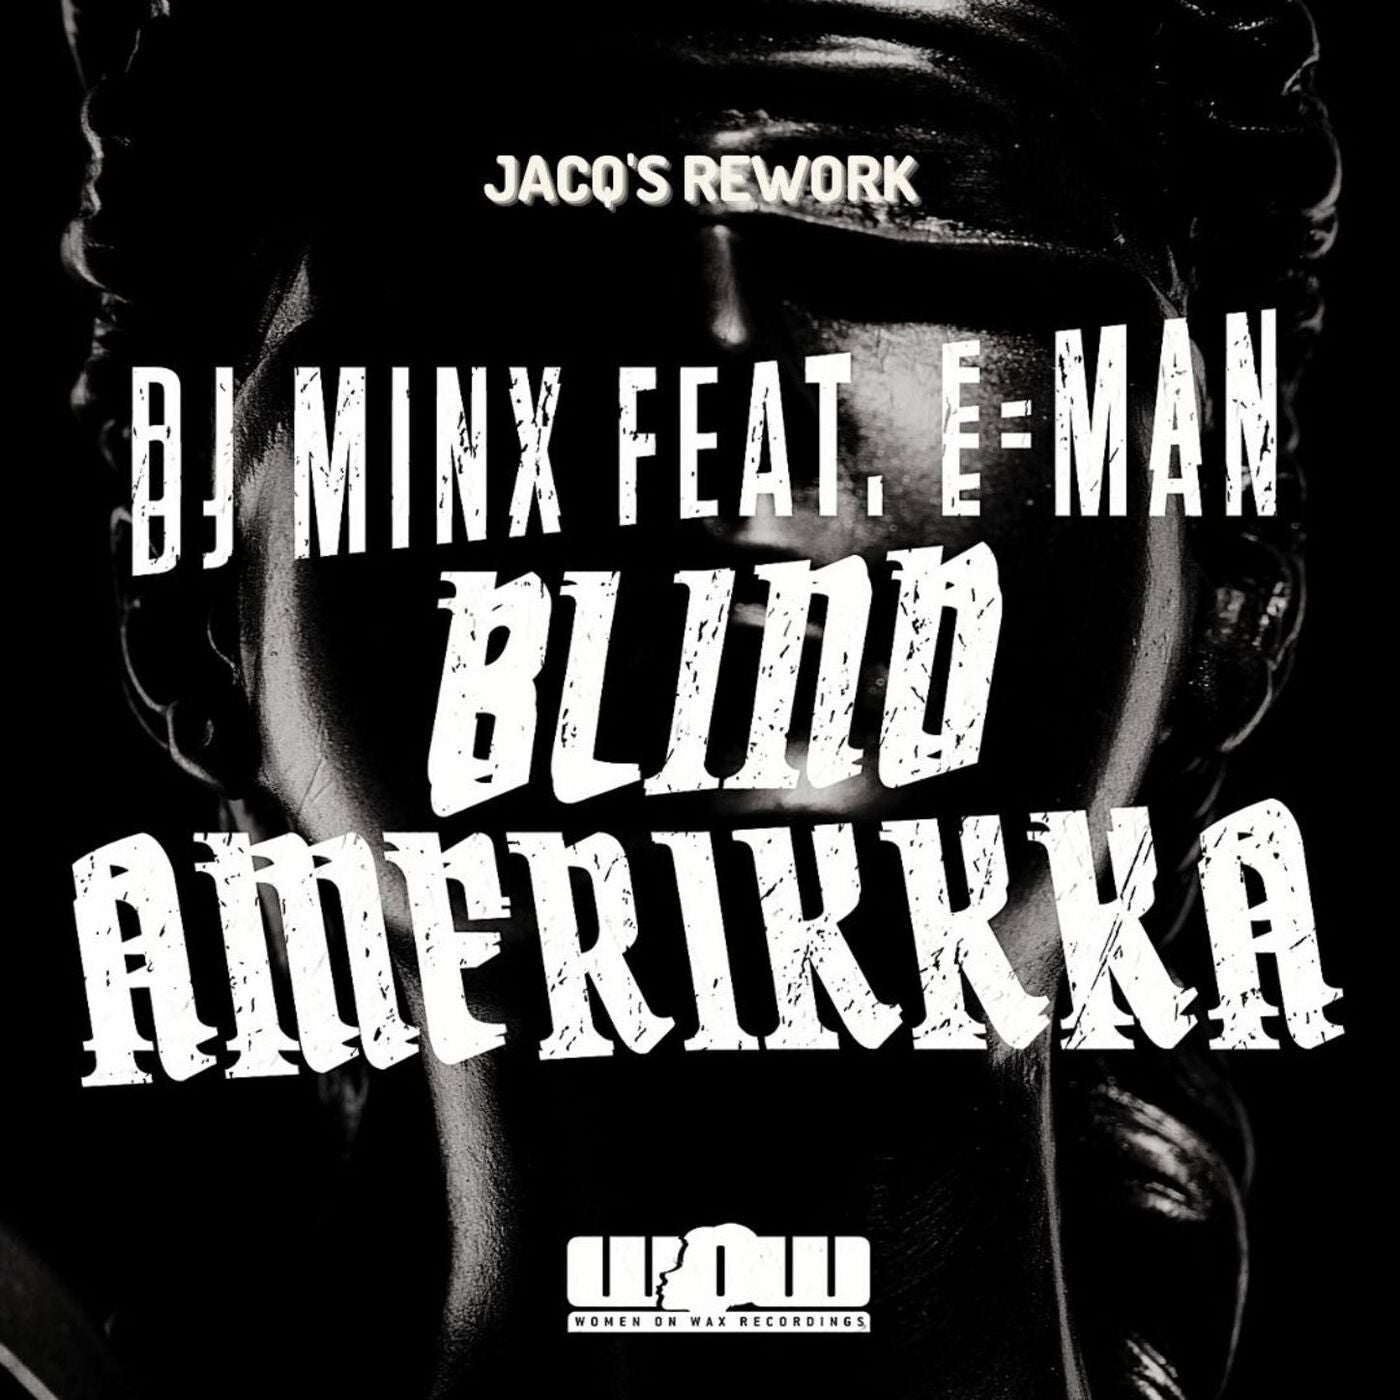 BLIND AMERIKKKA - THE REMIXES (DJ Jacq's Rework)